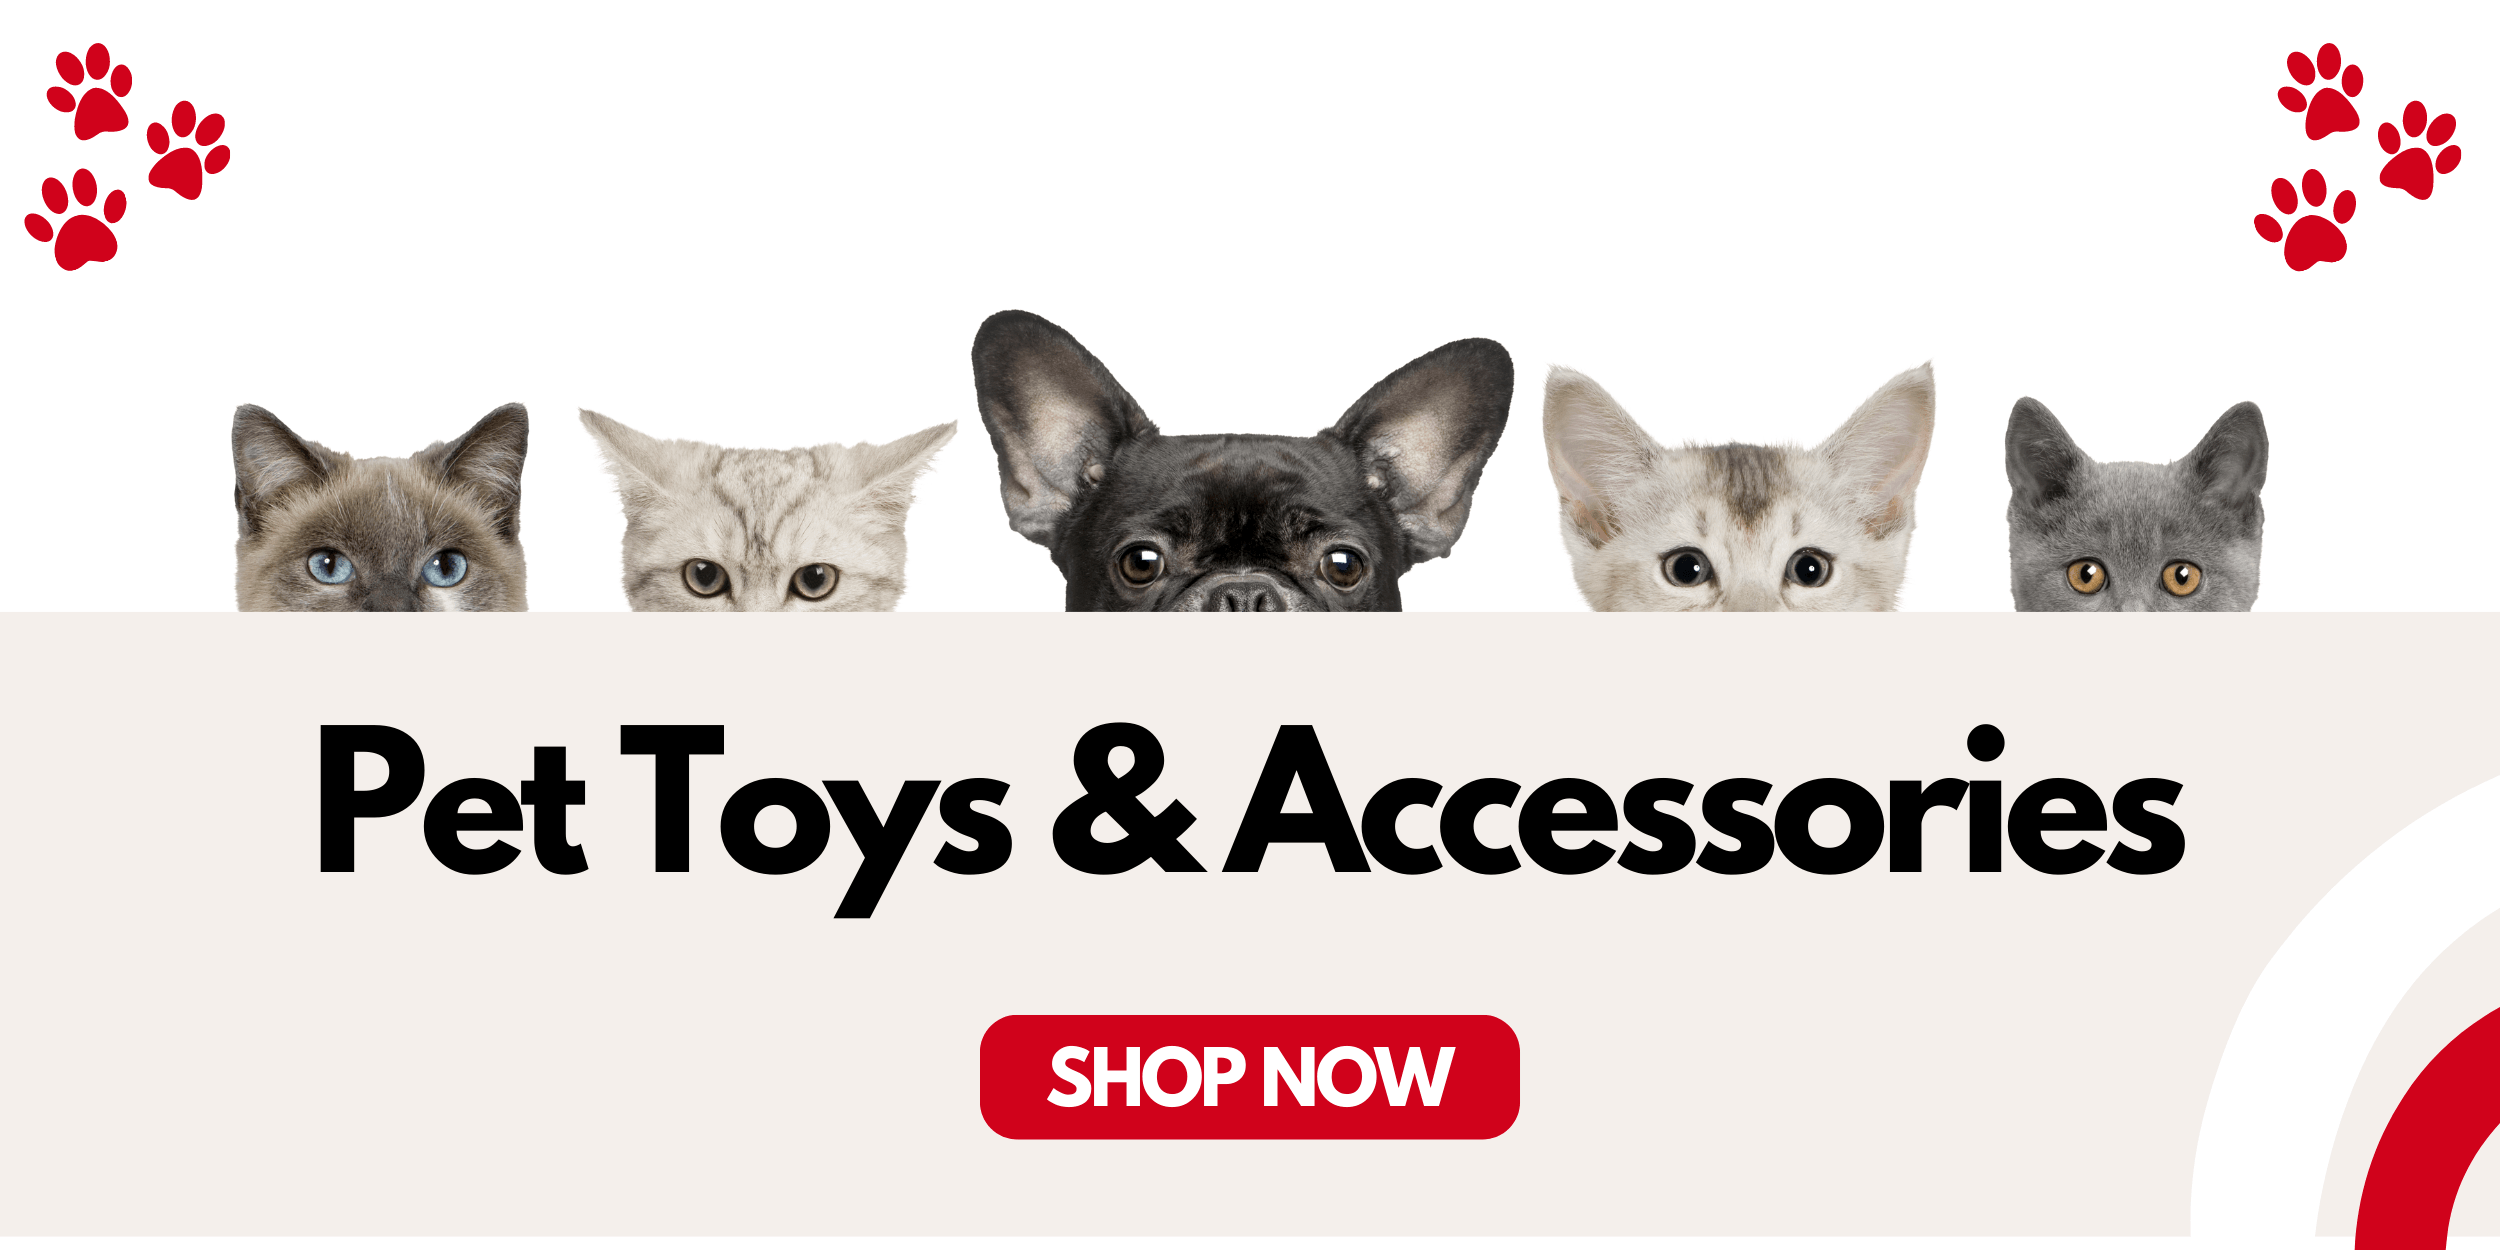 1- Shop our cat & dog accessories 